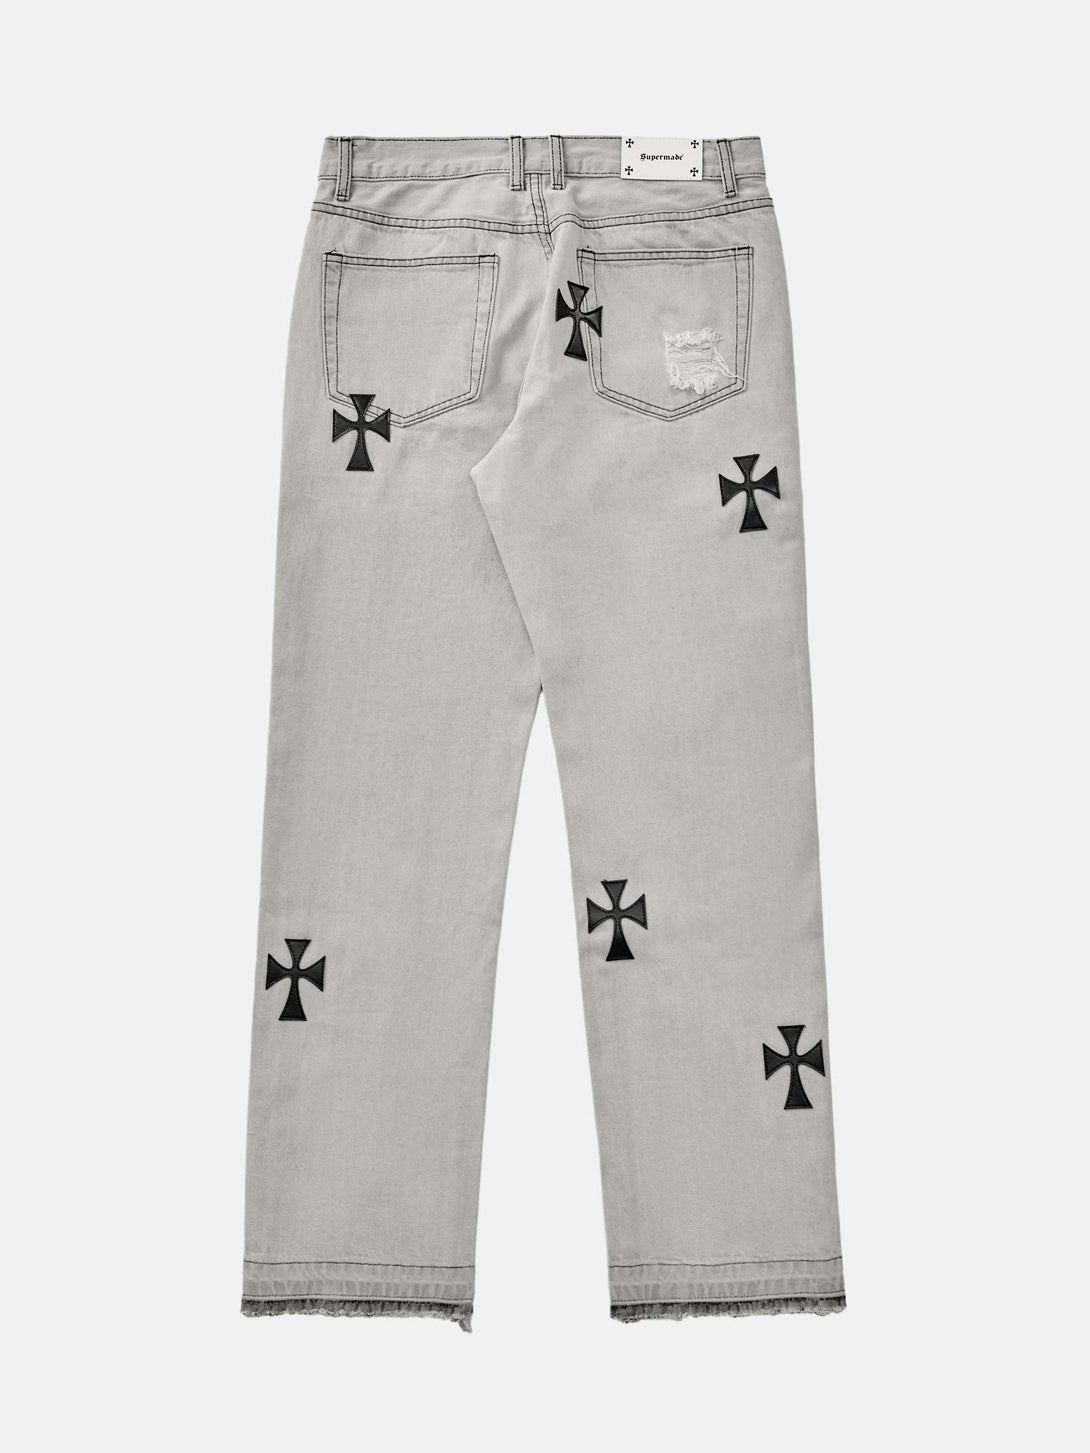 Majesda® - American Vintage Jeans - 1930- Outfit Ideas - Streetwear Fashion - majesda.com